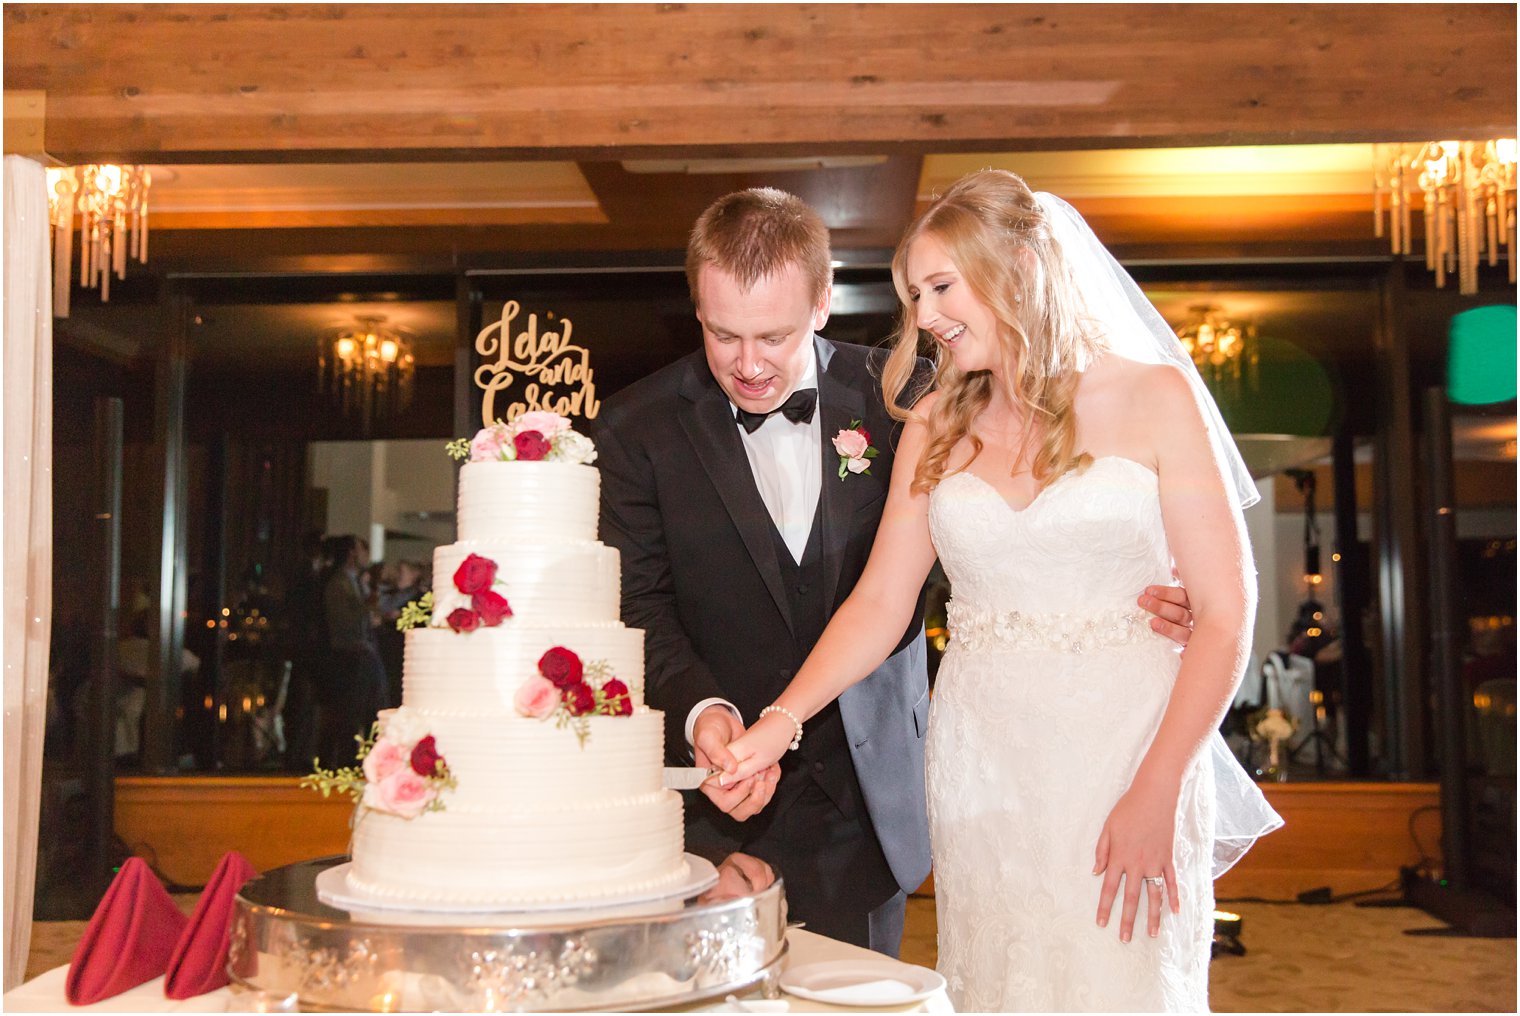 Bride and groom cutting cake during their Lambertville Station Inn Wedding